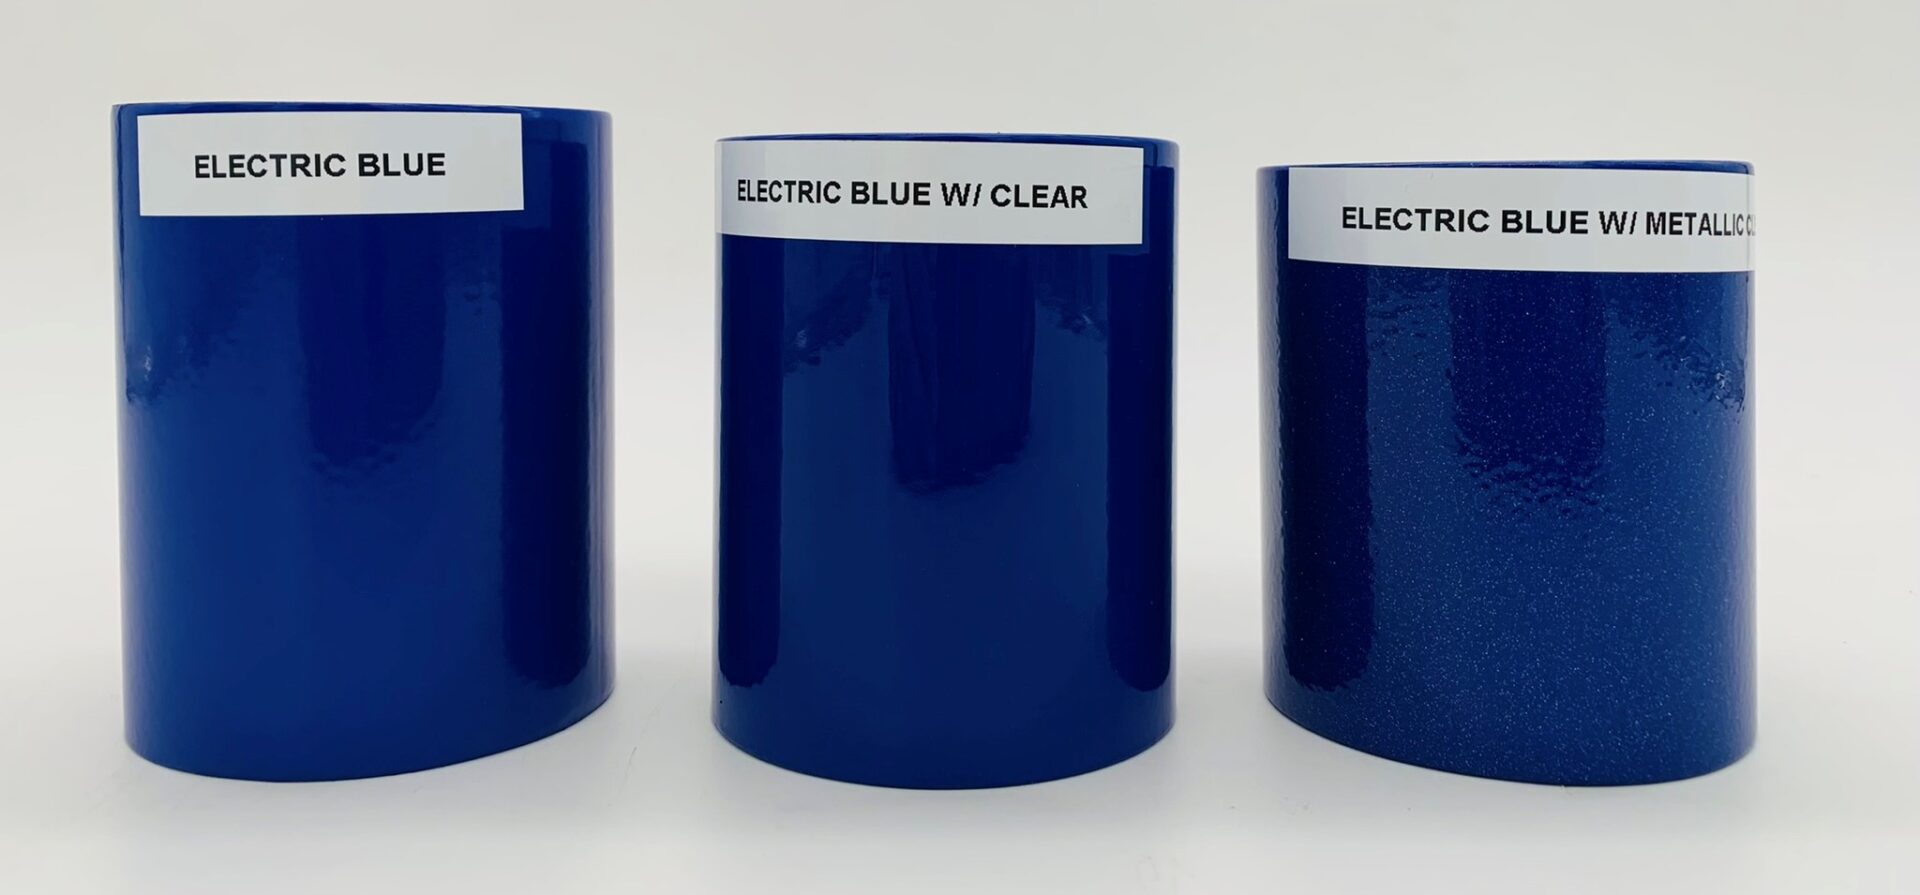 A set of electric blue color charts